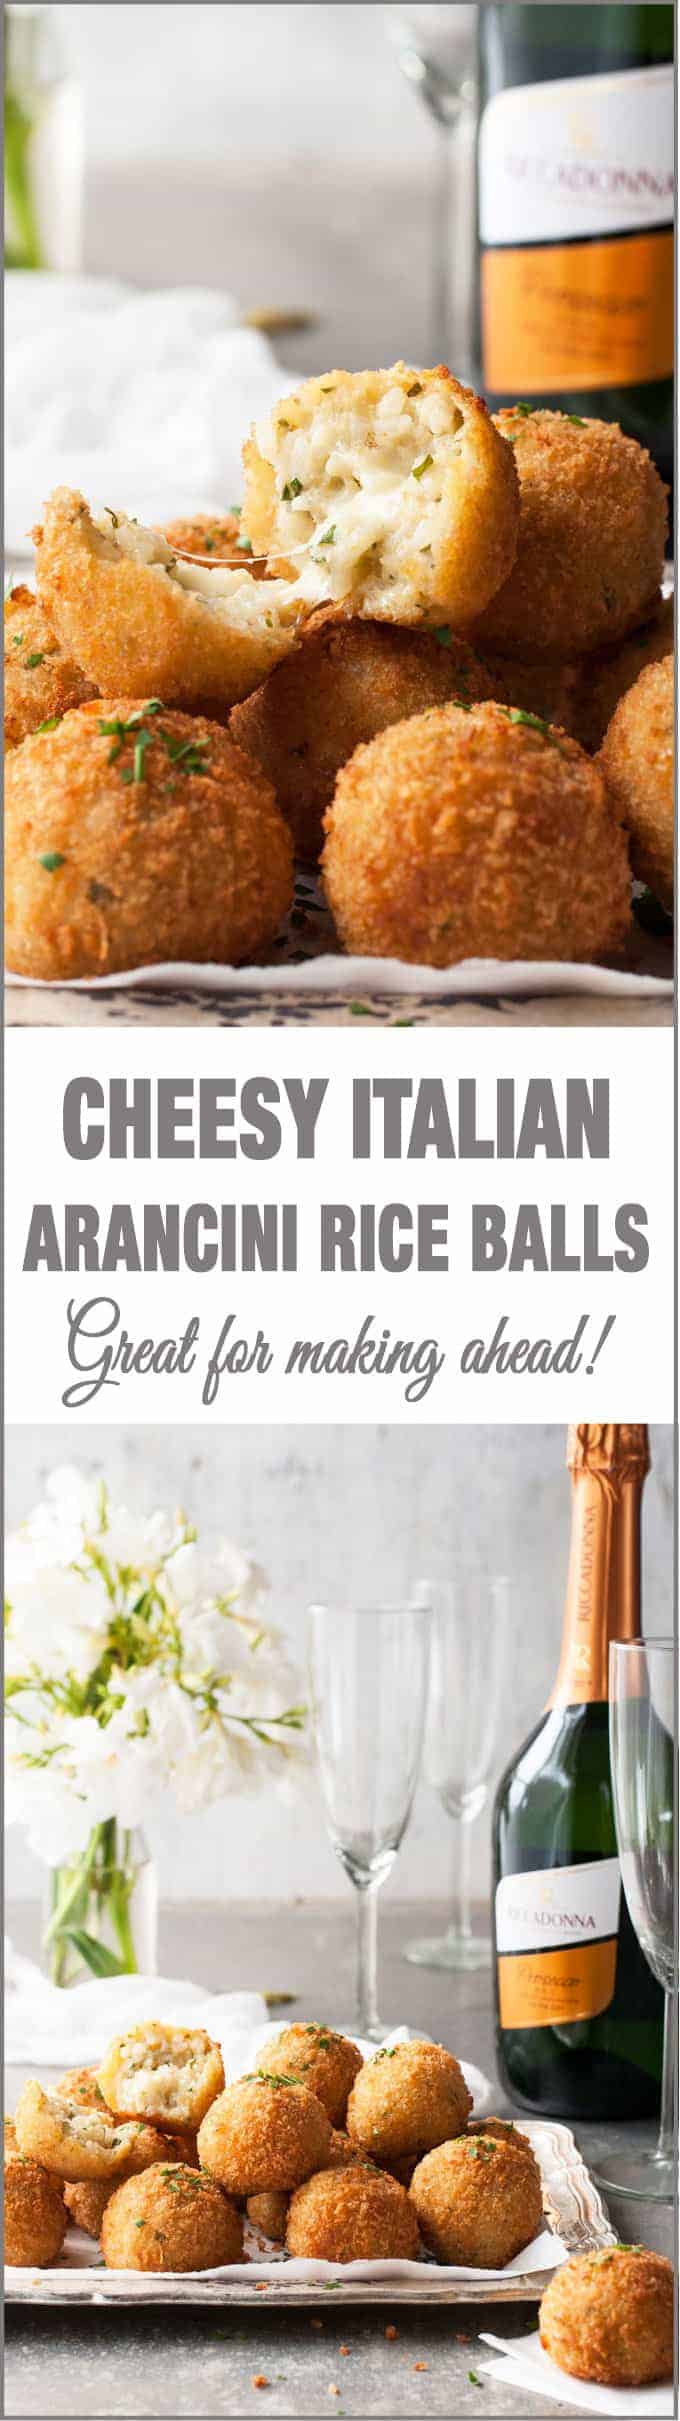 Cheesy Italian Arancini Rice Balls - Sensational for making ahead!